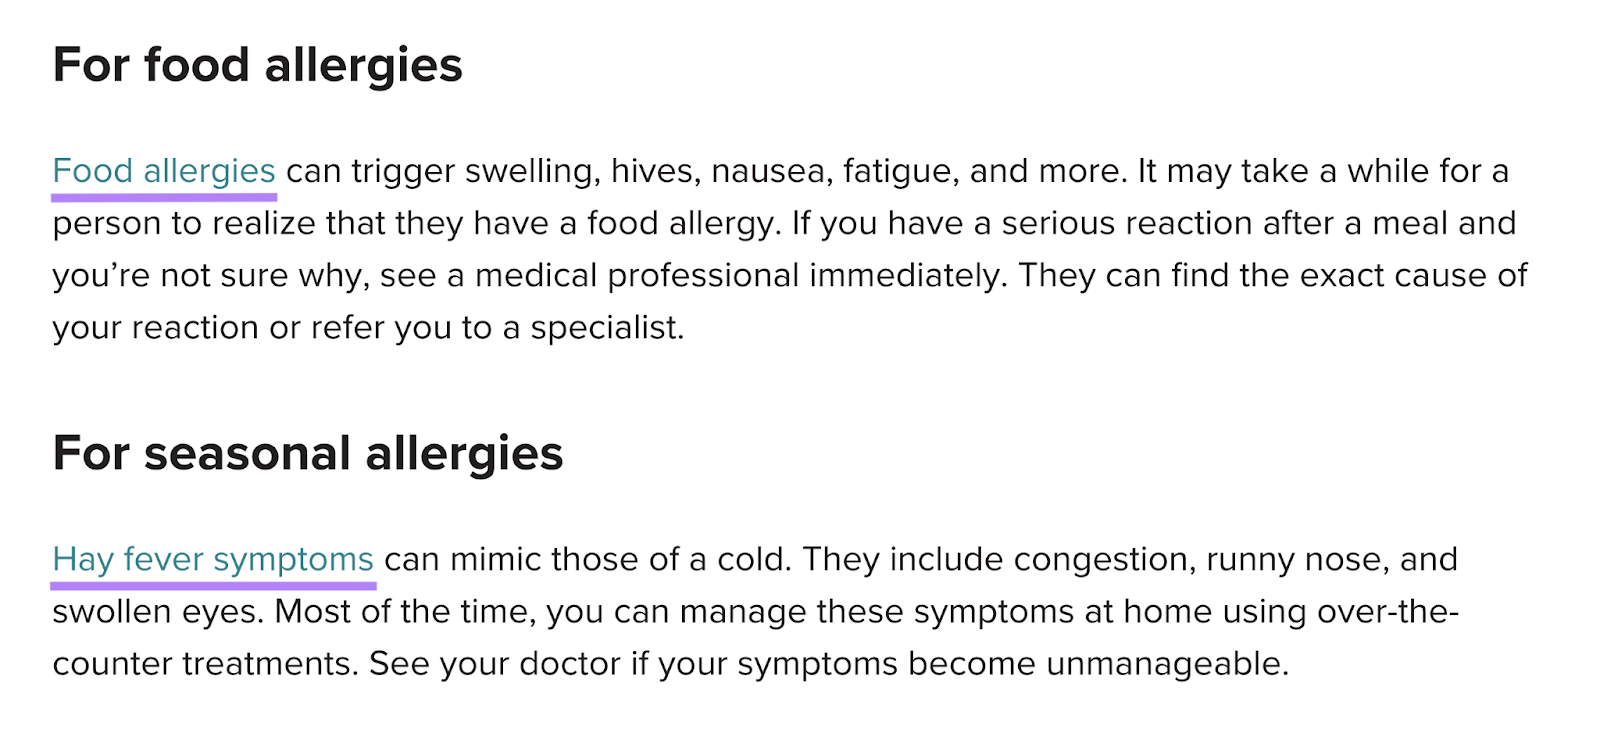 "Food allergies" and "Hay fever symptoms" links